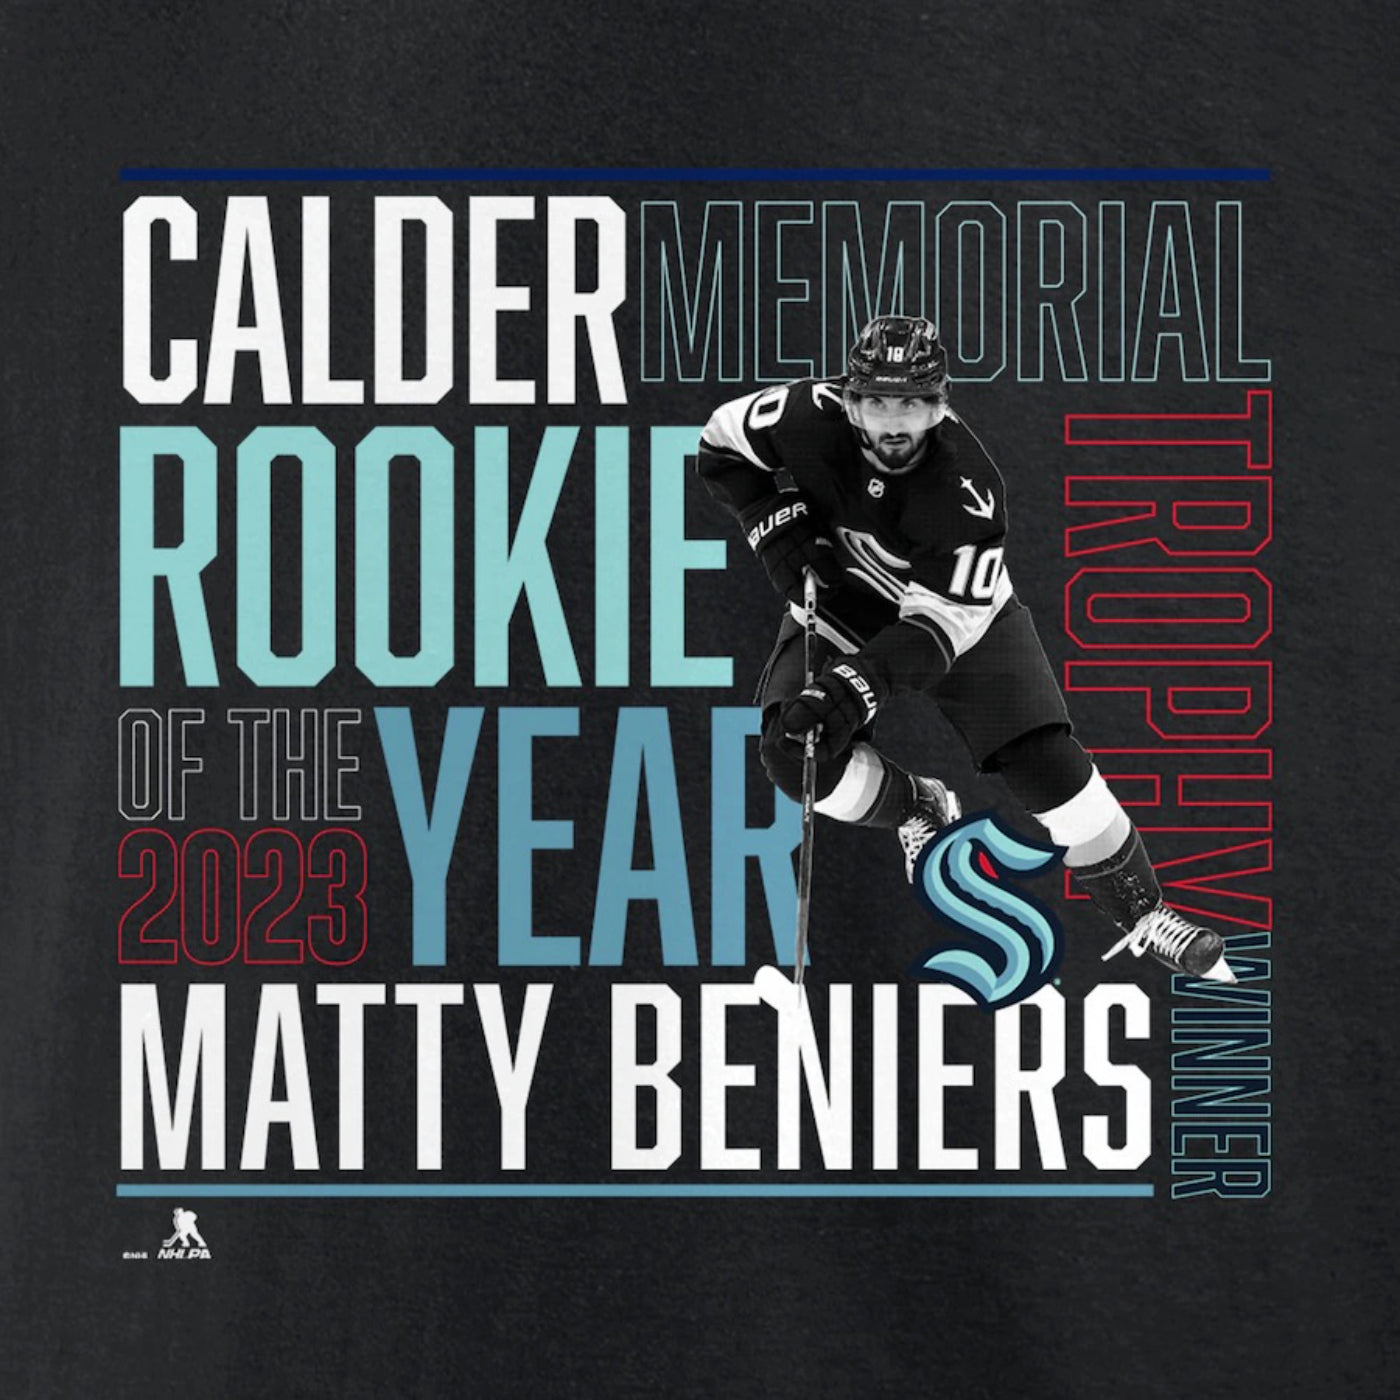 2022-2023 Calder Memorial Trophy Winner Matty Beniers Seattle Kraken Poster  Shirt - Shibtee Clothing